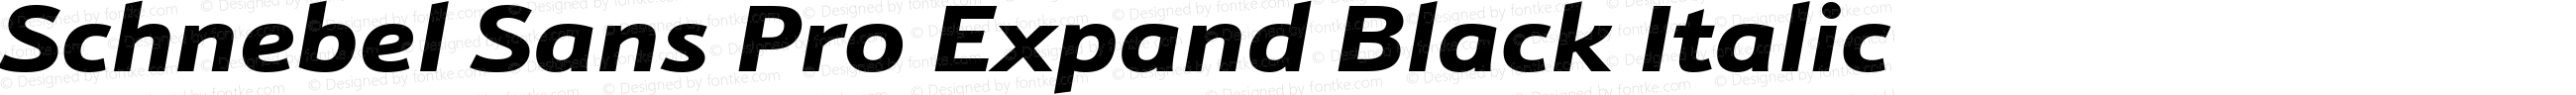 Schnebel Sans Pro Expand Black Italic